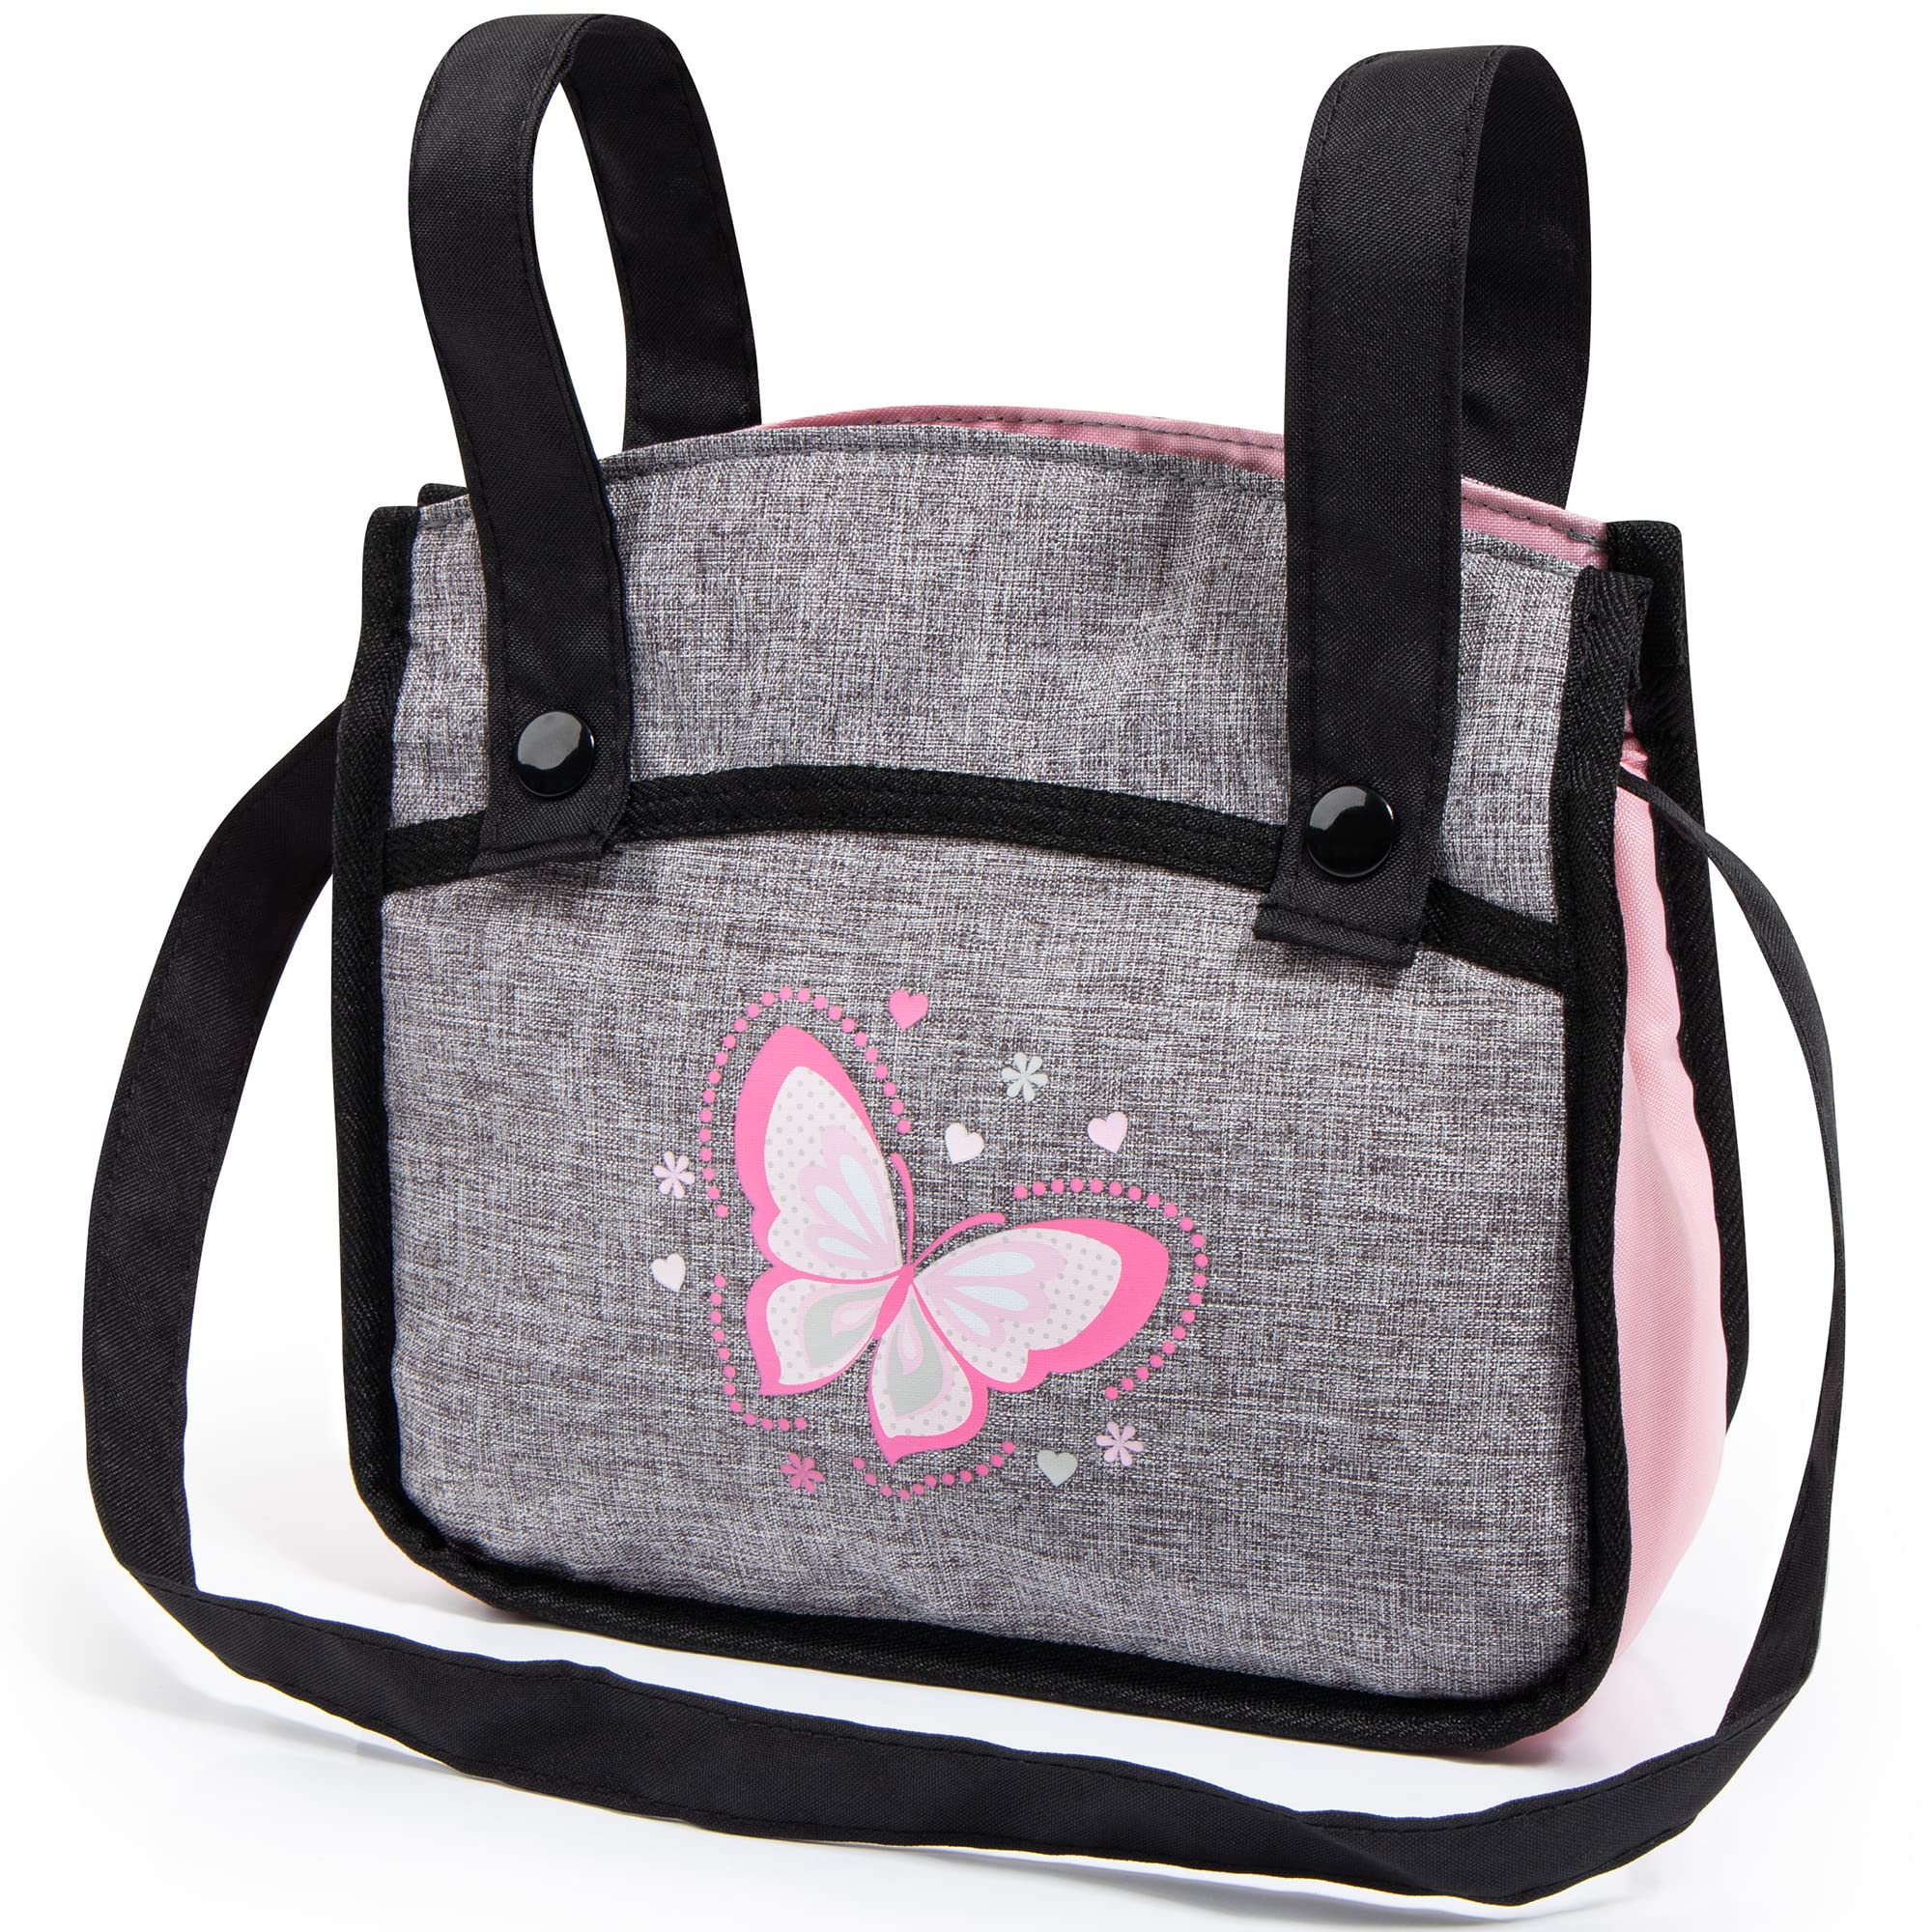 Bayer Design Dolls: Xeo Twin Pram - Butterfly Grey & Pink - Matching Handbag, Adjustable Handle, for Dolls Up to 20